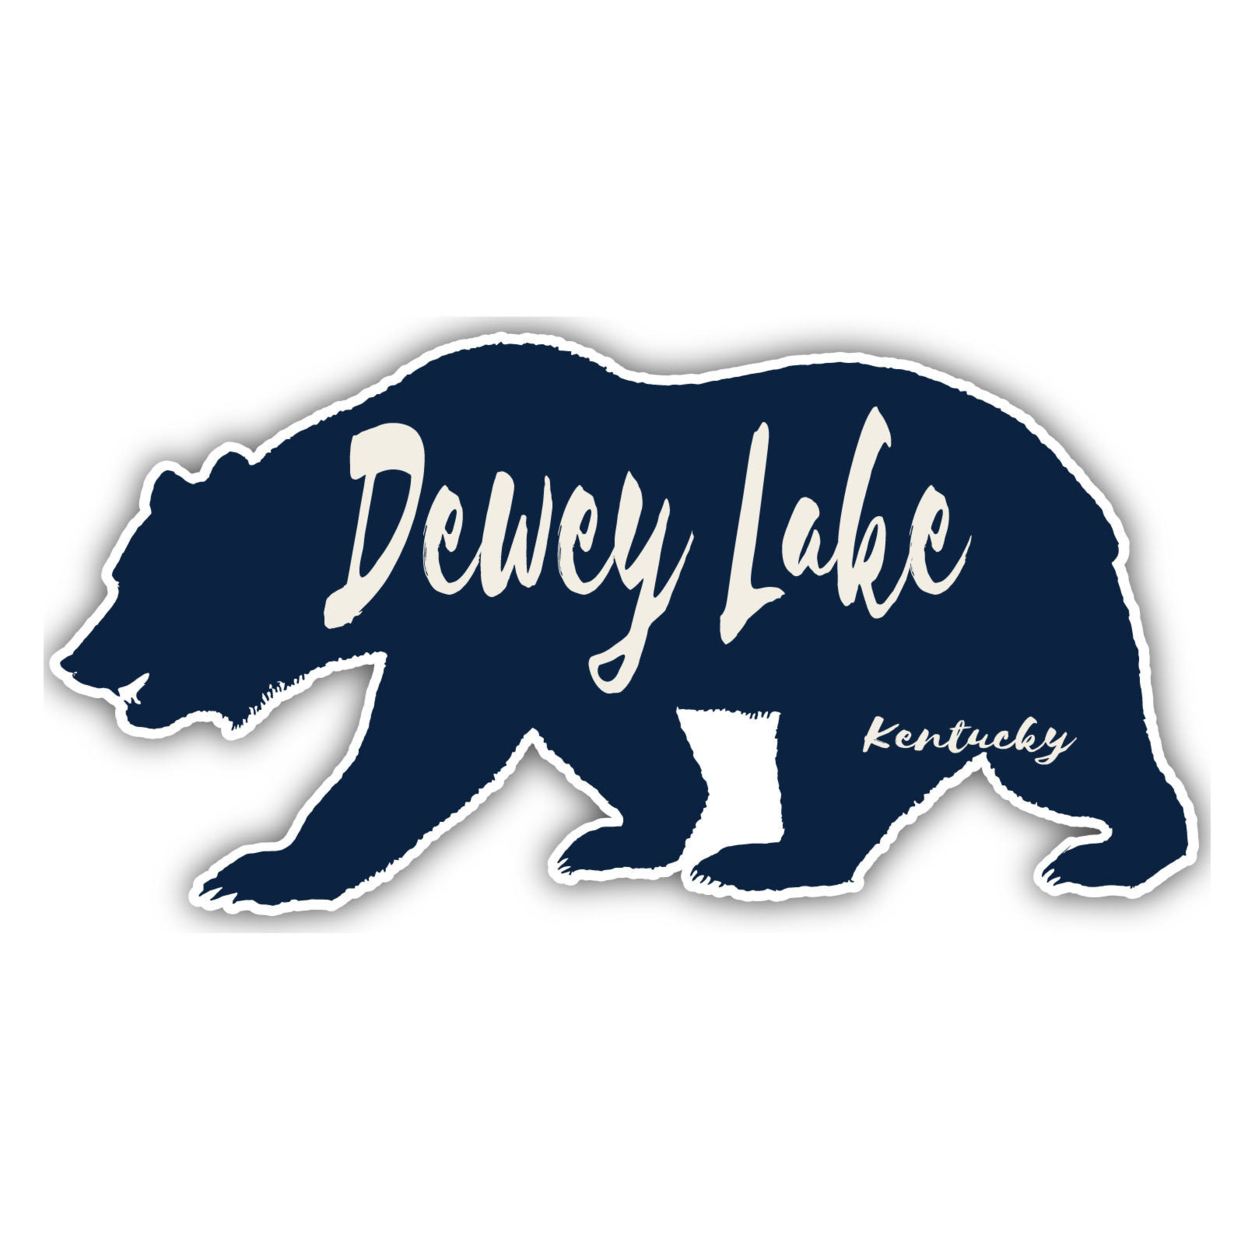 Dewey Lake Kentucky Souvenir Decorative Stickers (Choose Theme And Size) - 4-Pack, 12-Inch, Bear